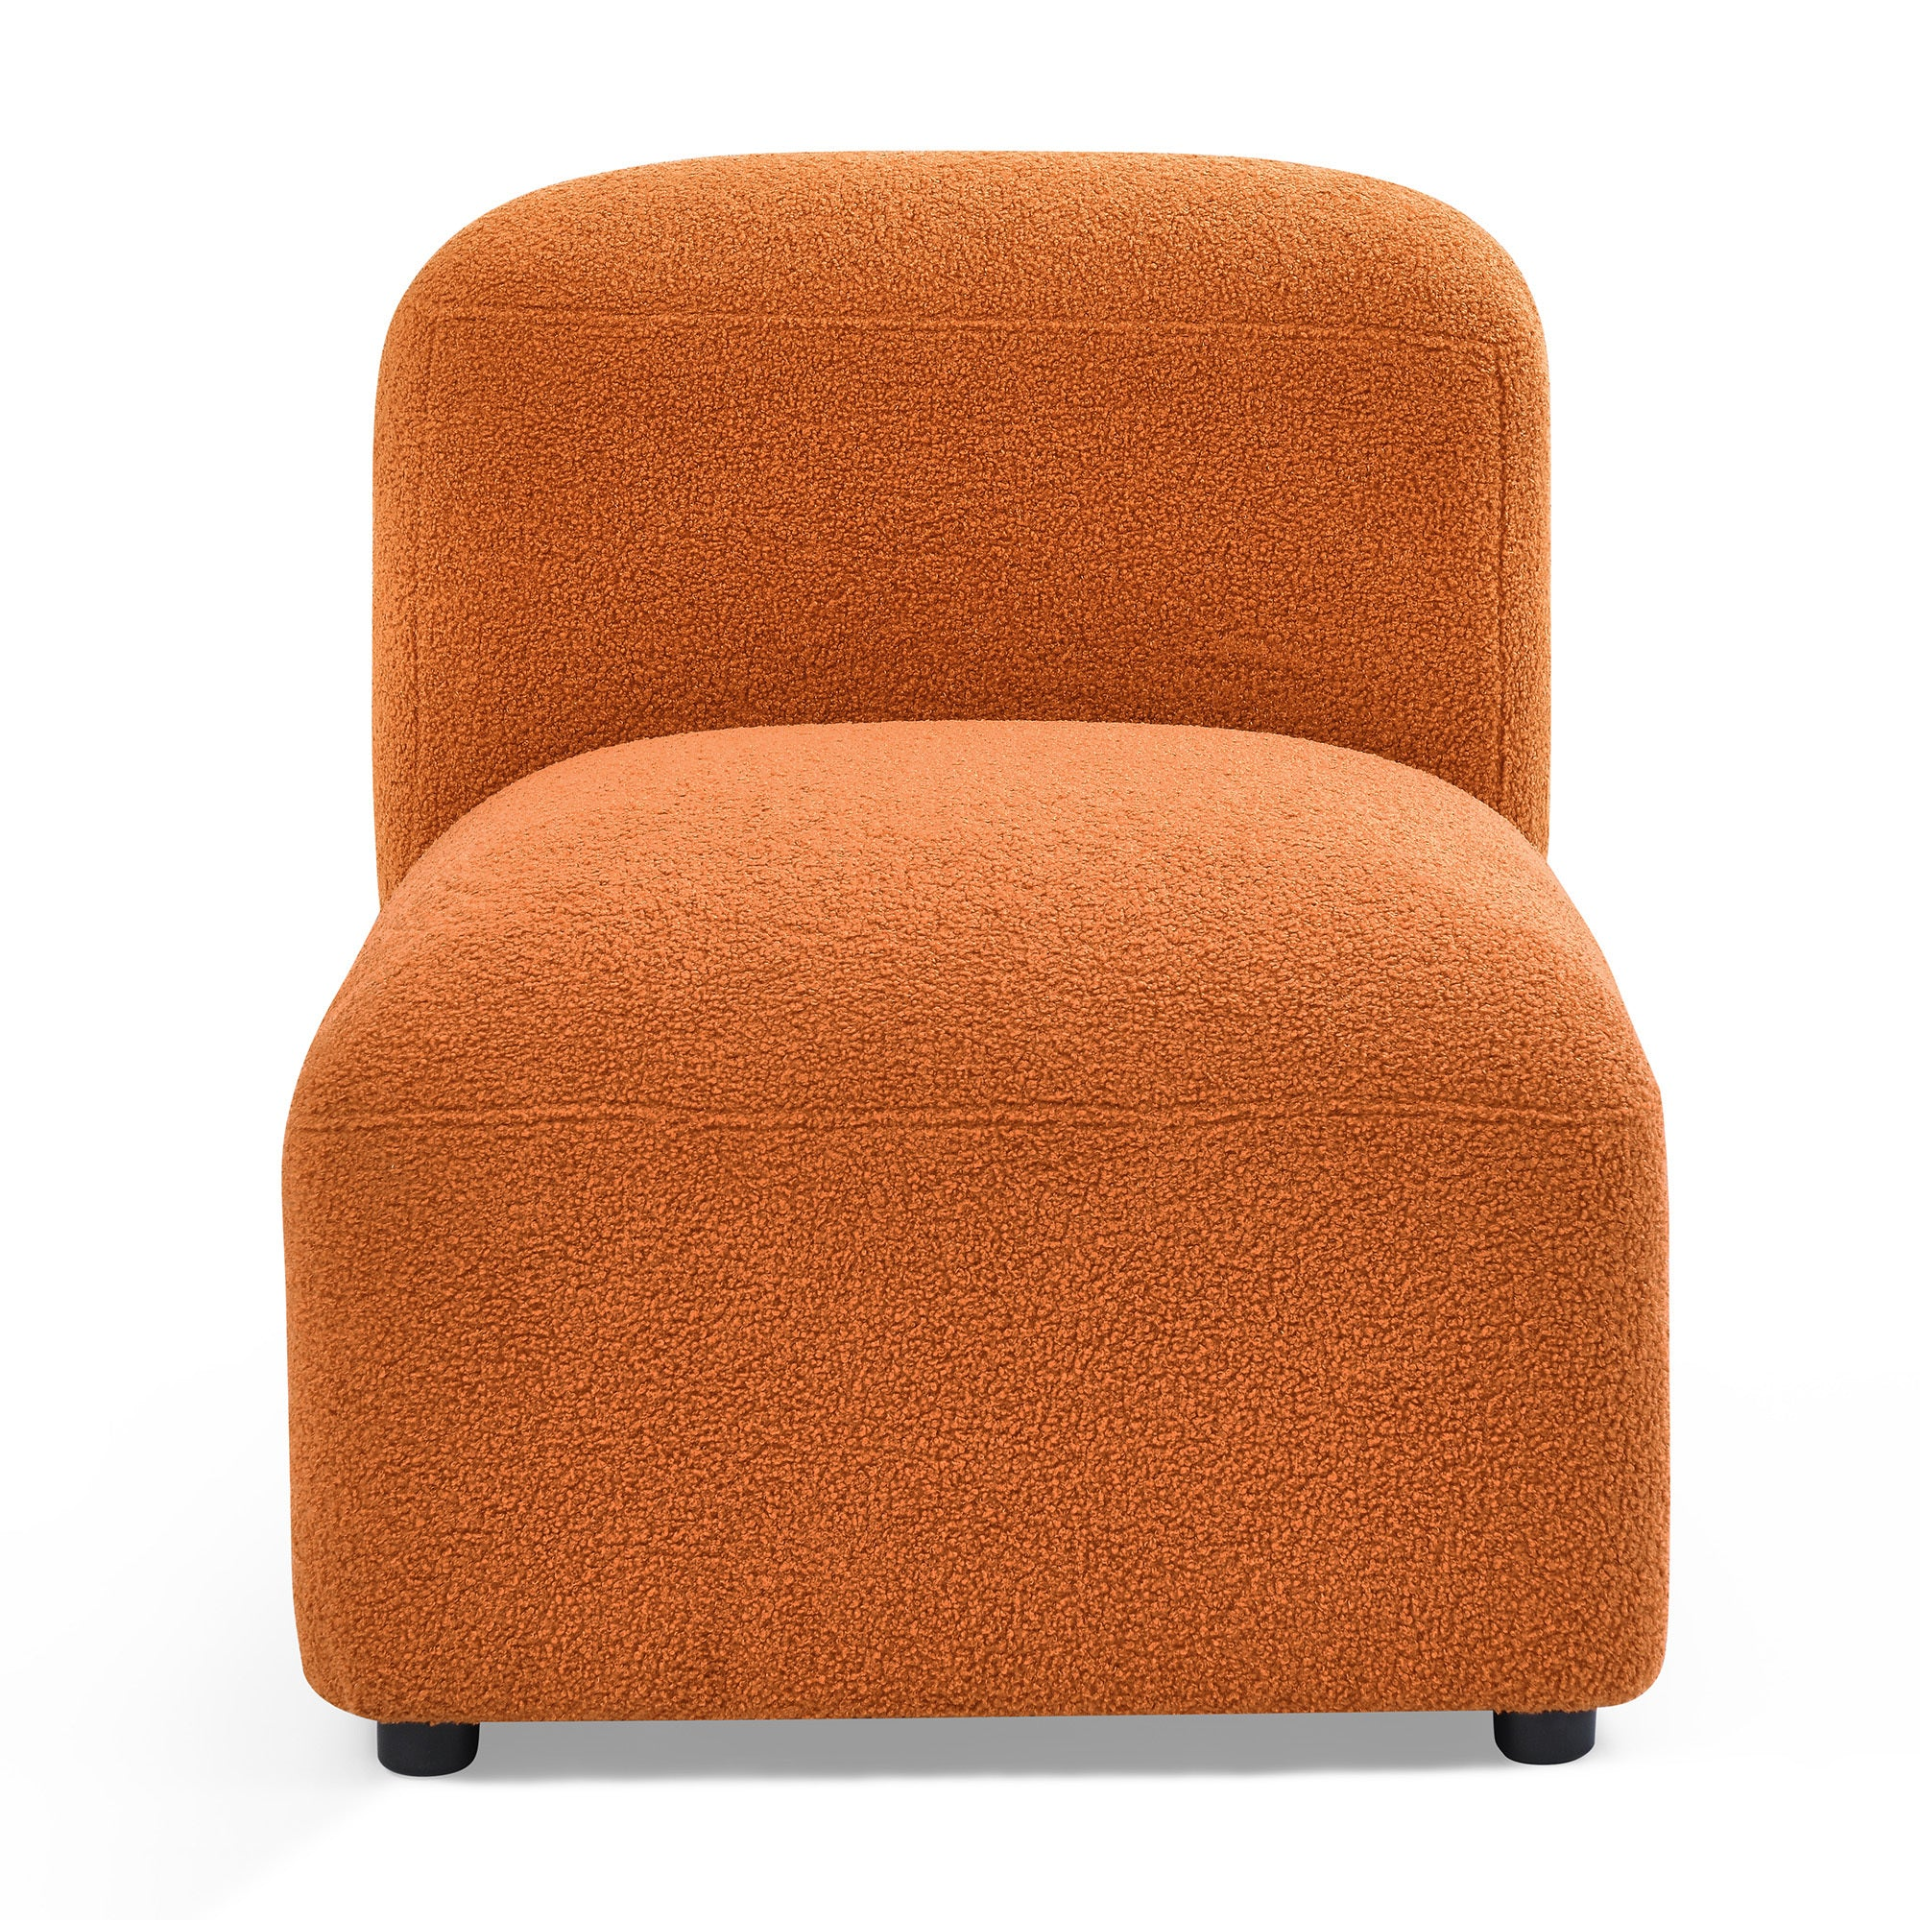 Orange: Cozy L-Shape Modular Style Sectional Sofa with DIY Combination (94.5" x 58")